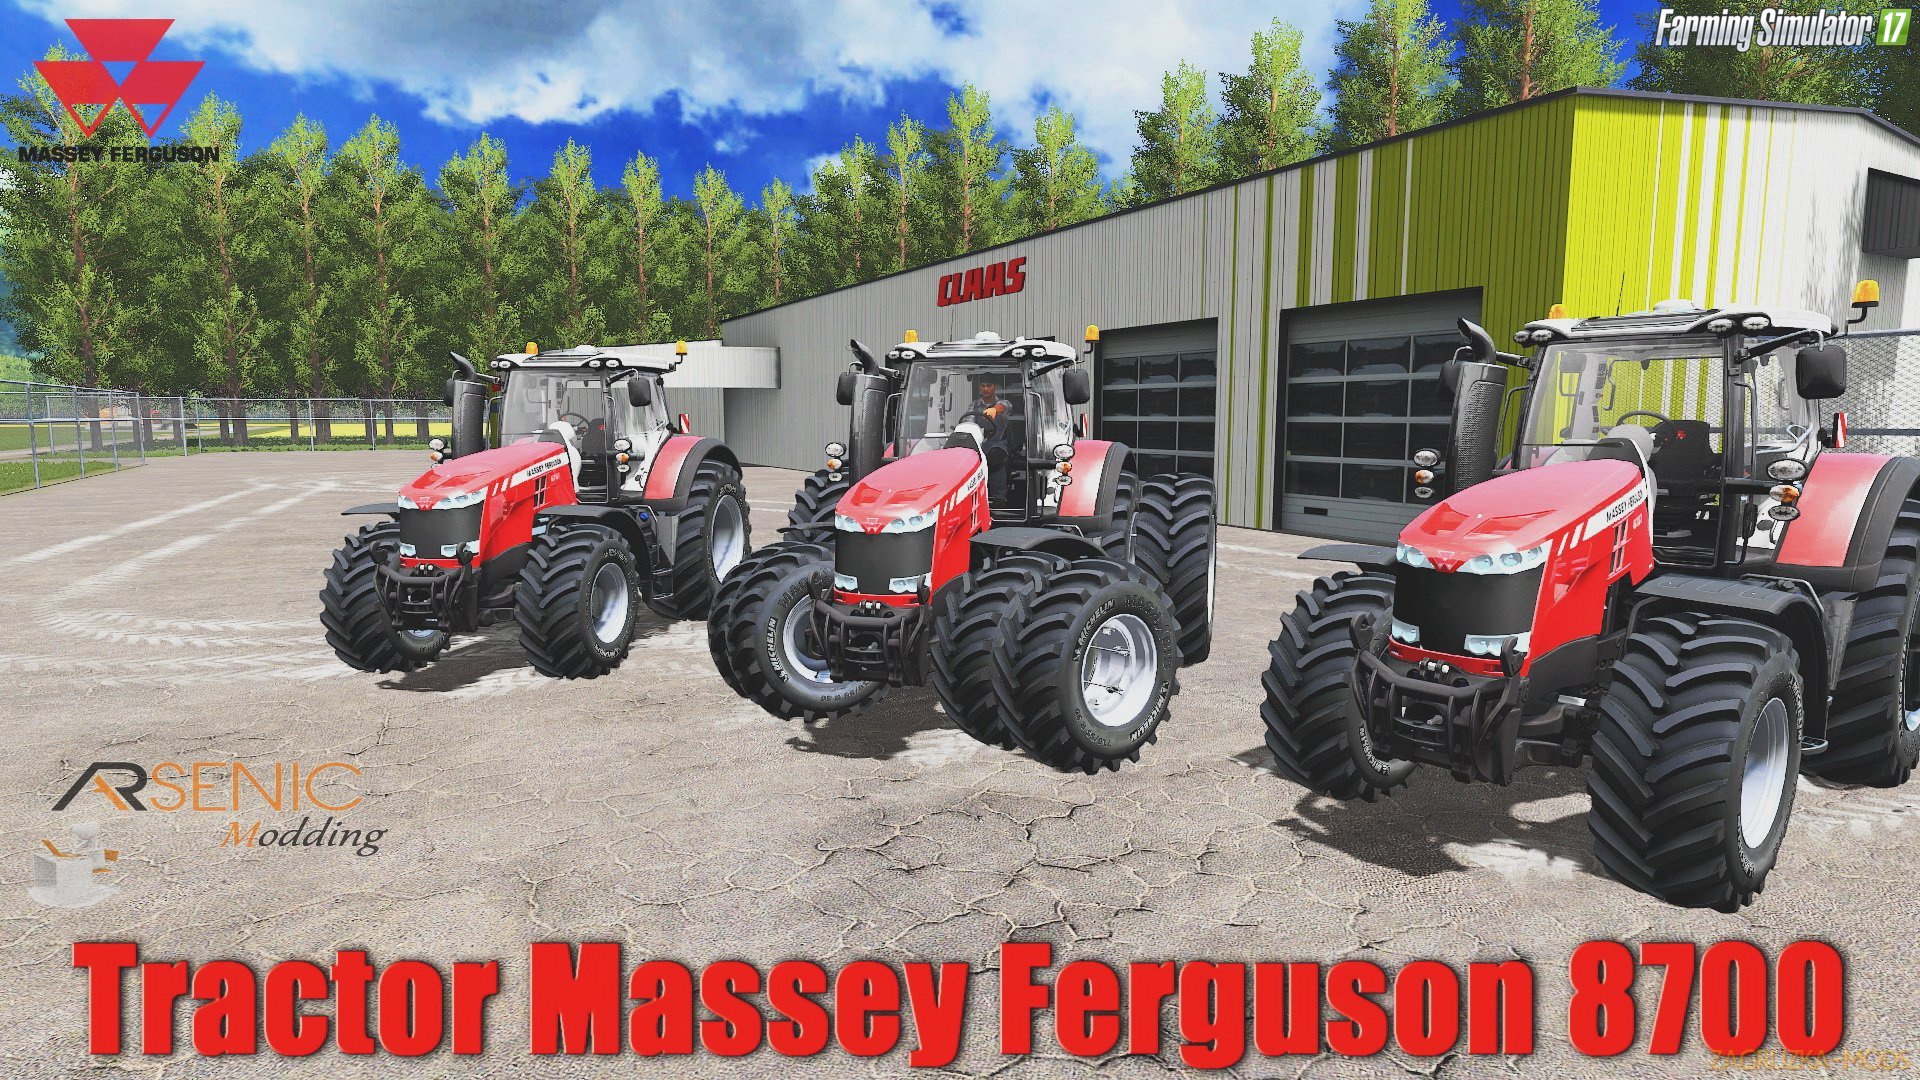 Massey Ferguson 8700 v1.0 by Arsenic Modding for FS 17